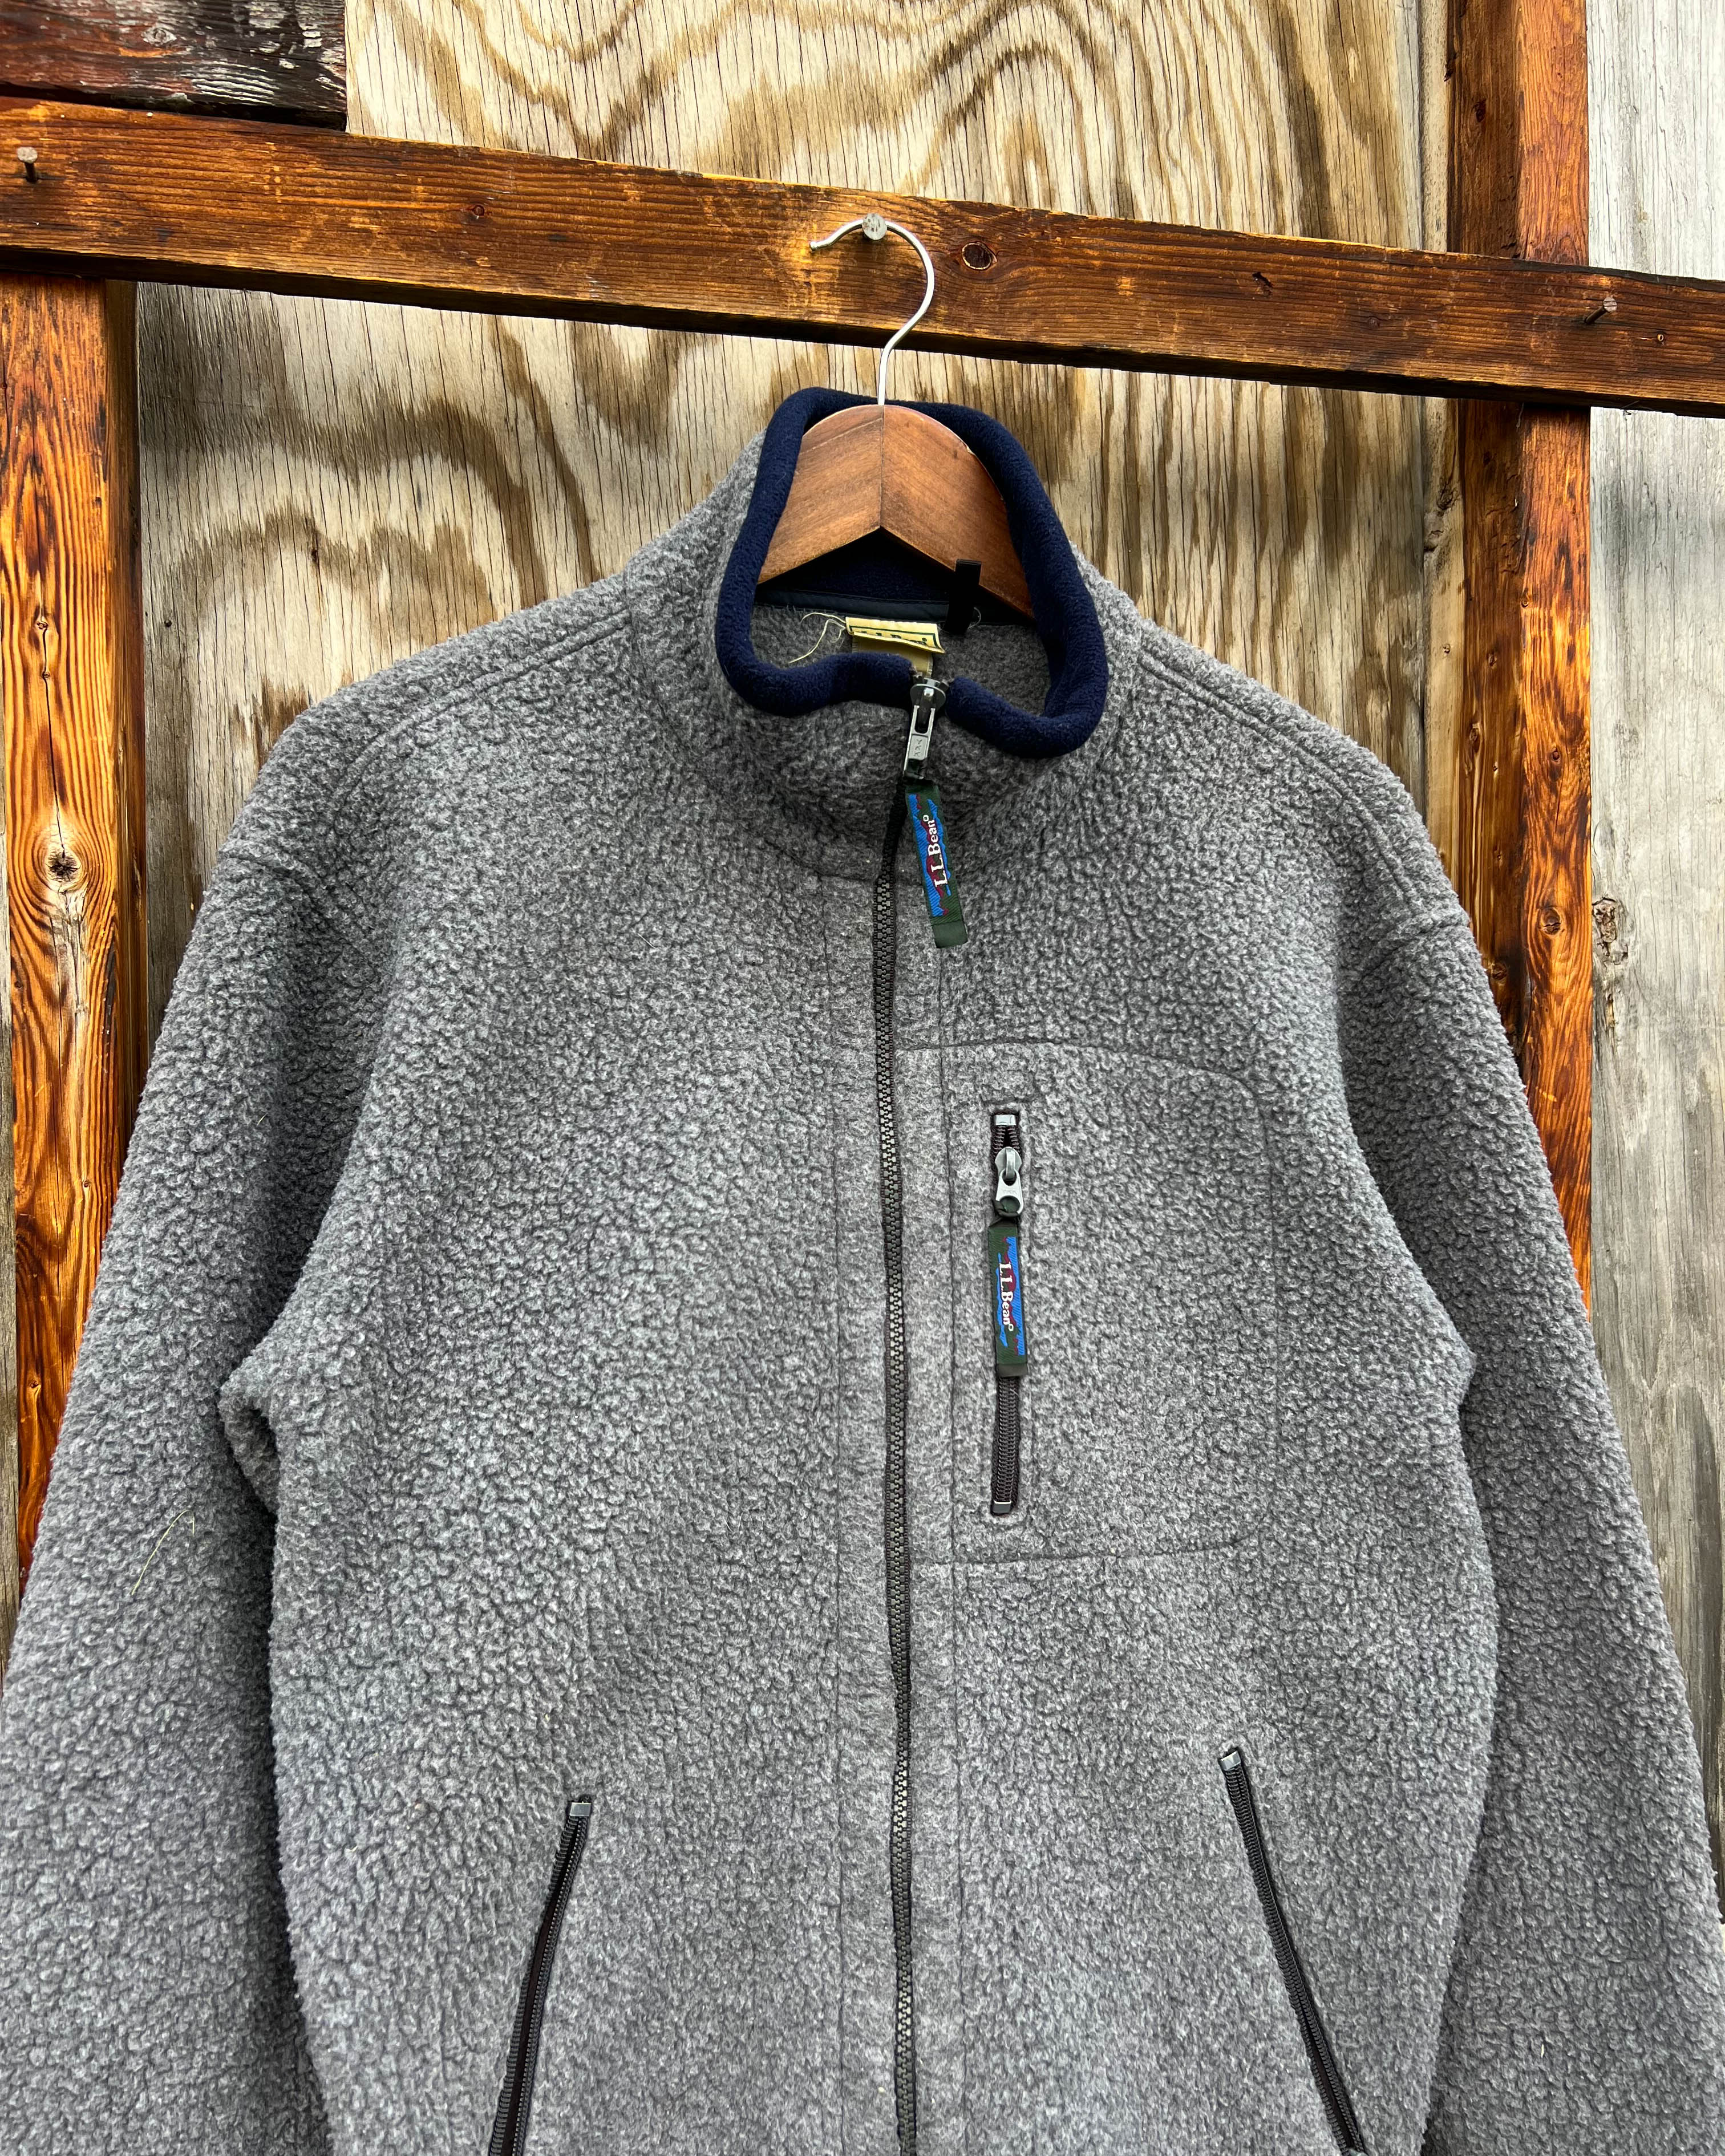 L.L.Bean vintage zip-up fleece jacket